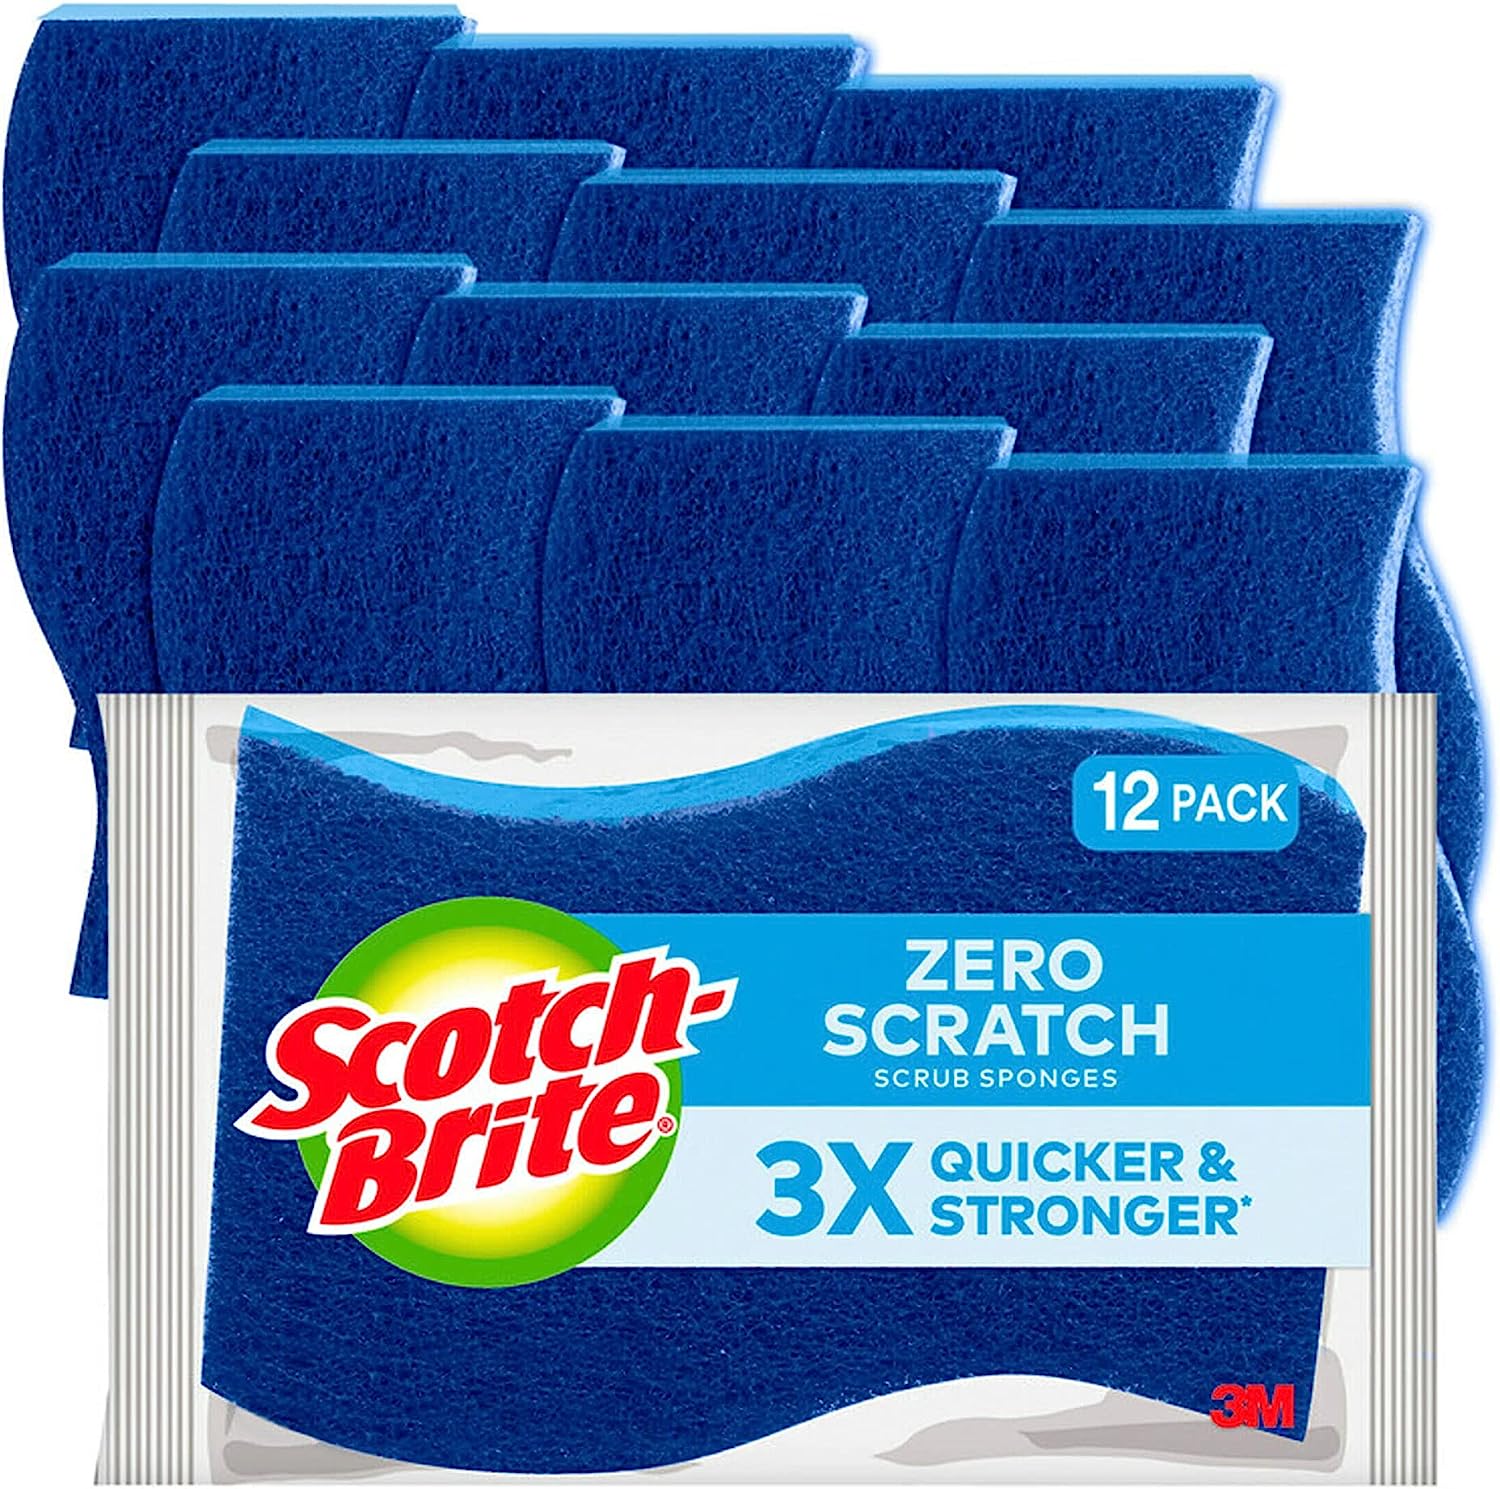 Scotch-Brite Zero Scratch Non-Scratch Scrub Sponges, Sponges for Cleaning Kitchen, Bathroom, and Household, non-scratch Sponges Safe for Non-Stick Cookware, 12 Scrubbing Sponge